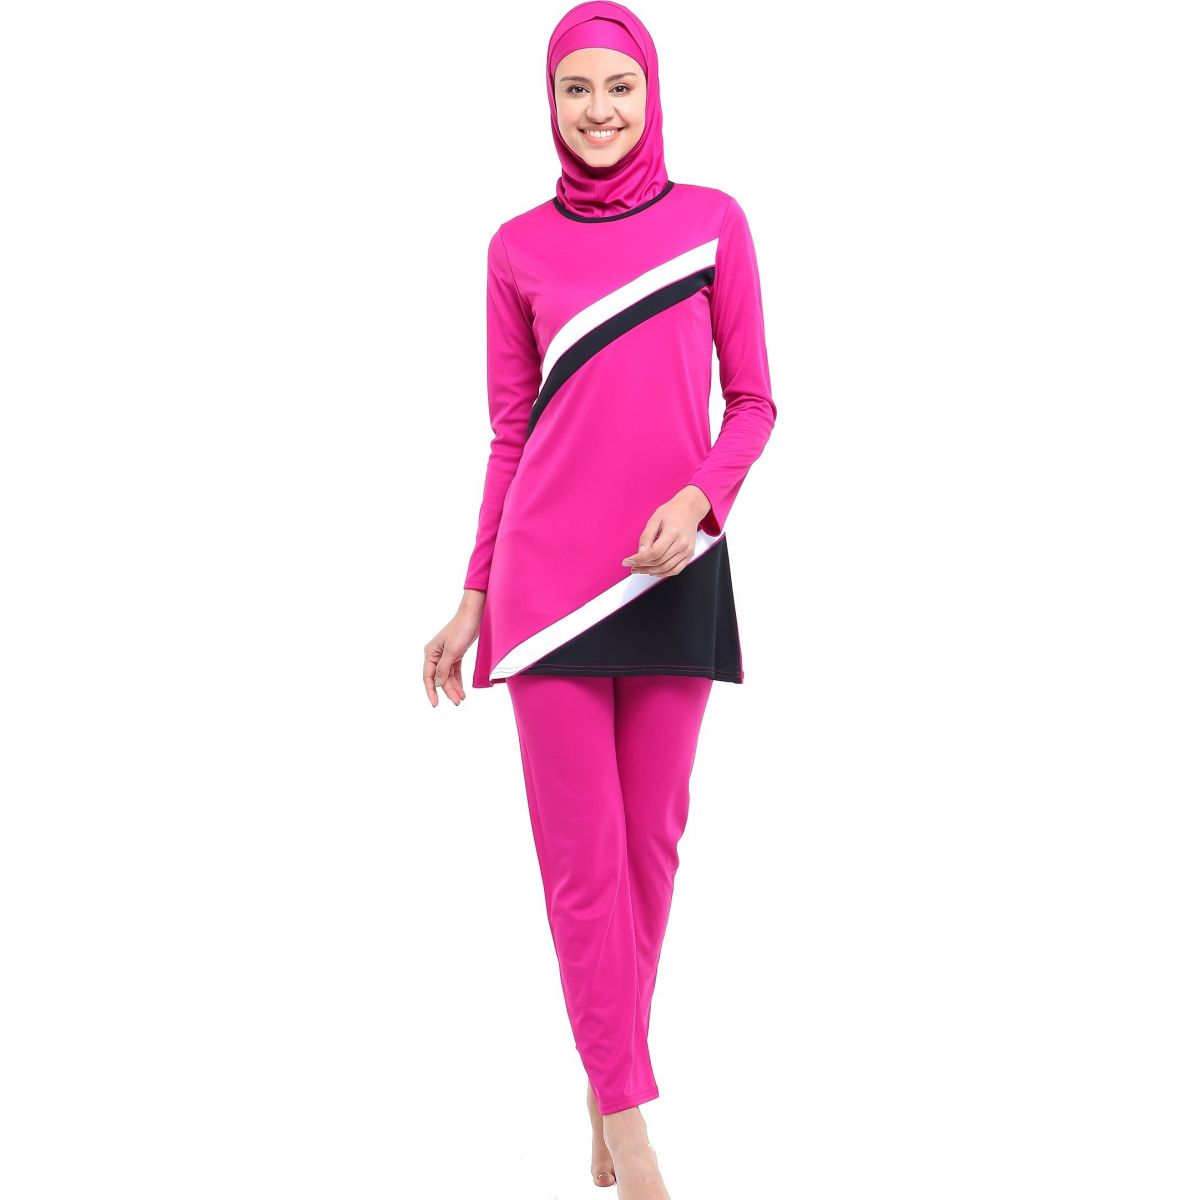 Argisa 7013 Long Sleeved Baggy The Tights Plus Size Full Hijab swimwear 46-52 Muslim Hijab Islamic Swimsuit Burkini Turkey Full Cover swim